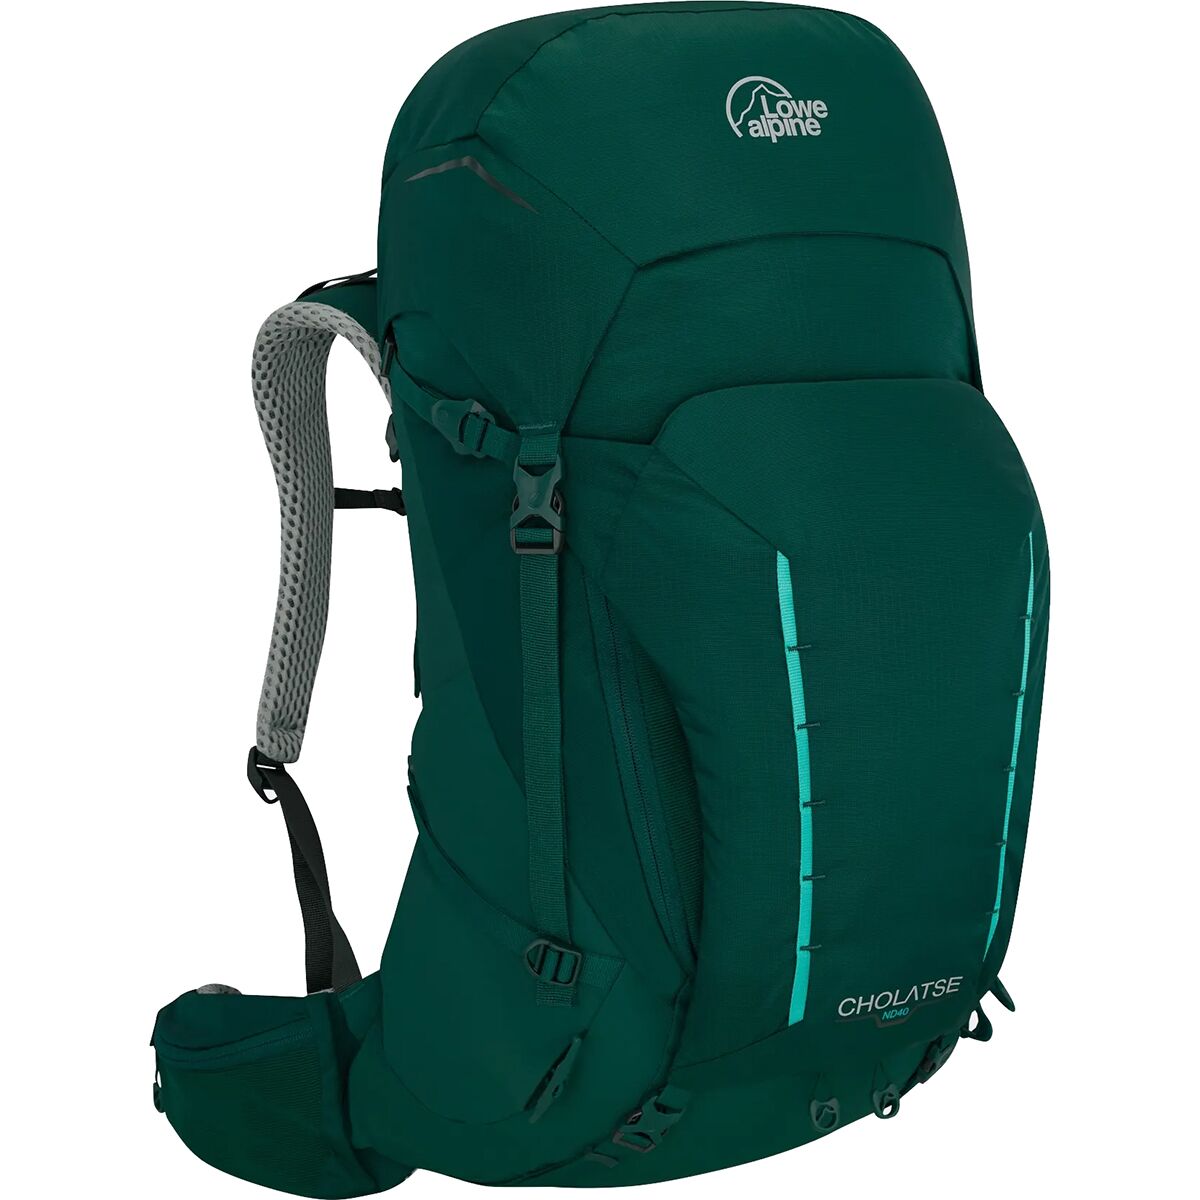 Lowe Alpine Cholatse ND 40L + 5 Backpack